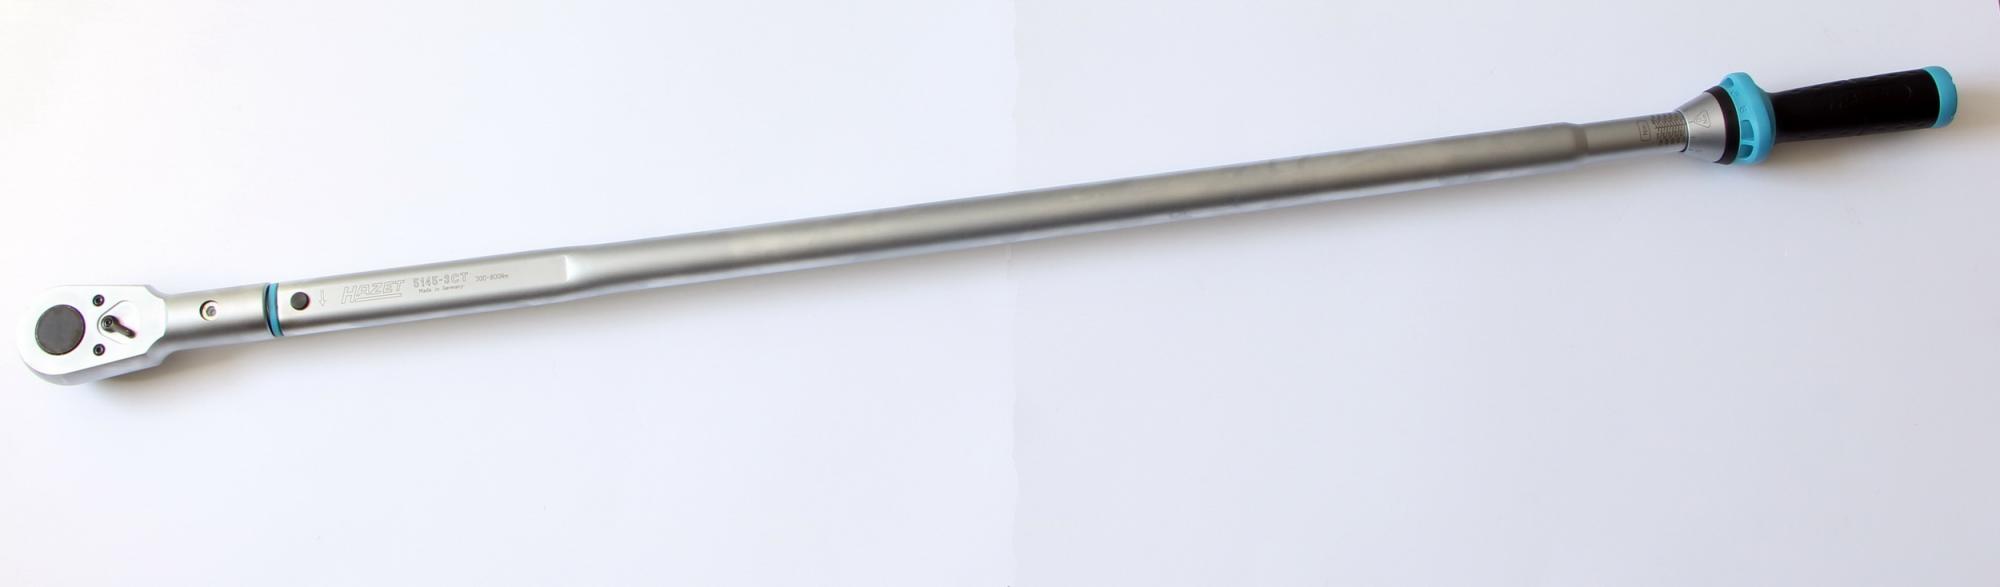 Hazet 5145-3CT 3/4" Drehmomentschlüssel Knarre 300 - 800 nm NFZ KFZ Werkzeug